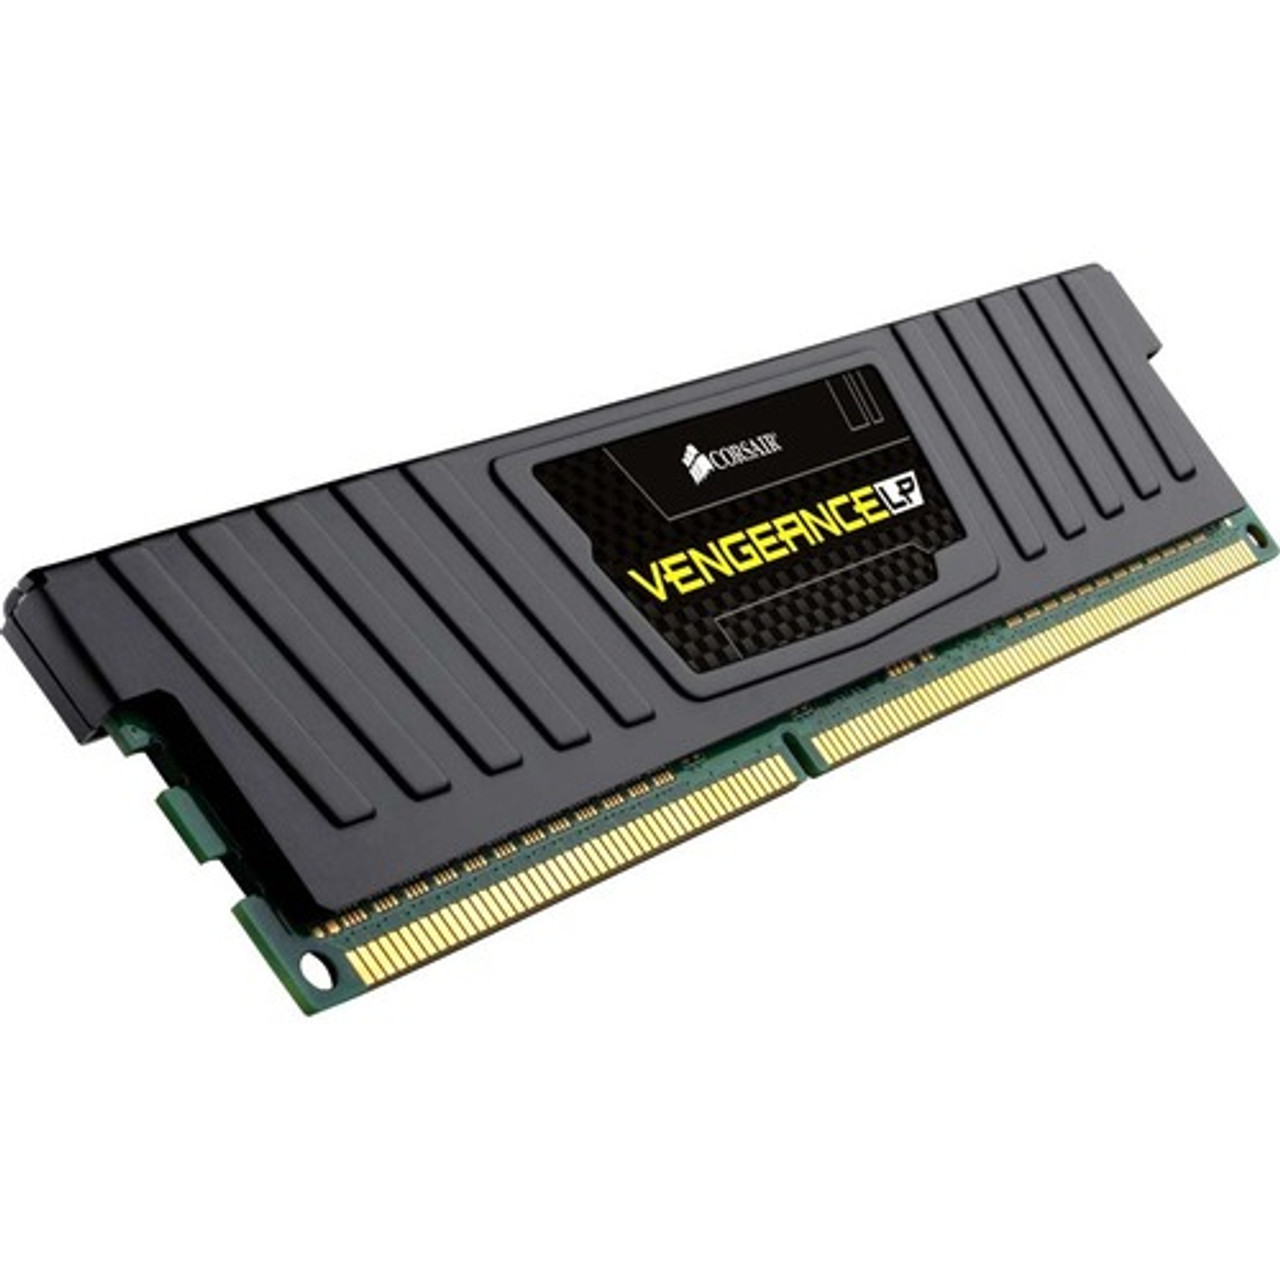 Corsair Vengeance 32GB DDR3 SDRAM Memory Module Kit - For Desktop PC - 32 GB (4 x 8GB) - DDR3-1600/PC3-12800 DDR3 SDRAM - 1600 MHz - CL10 - 1.50 V - Unbuffered - 240-pin - DIMM - Lifetime Warranty CL10 VEGEANCE LP FOR INTEL DUAL